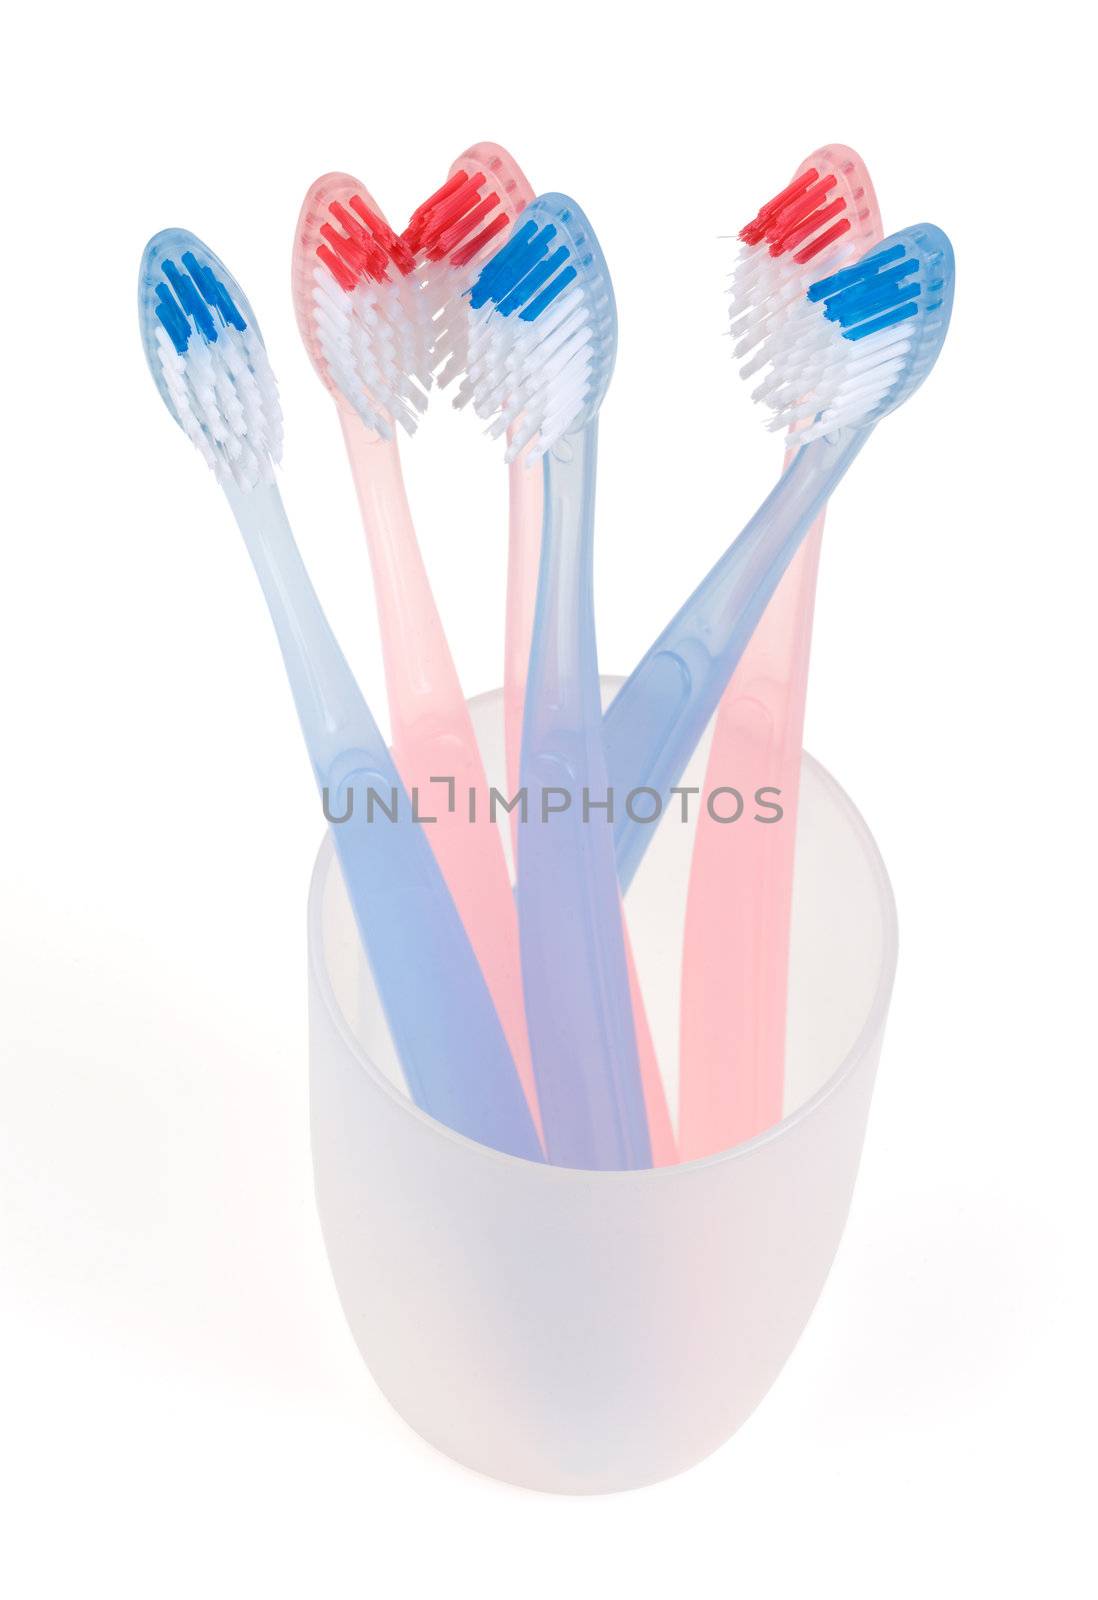 Toothbrush by fotoedgaras